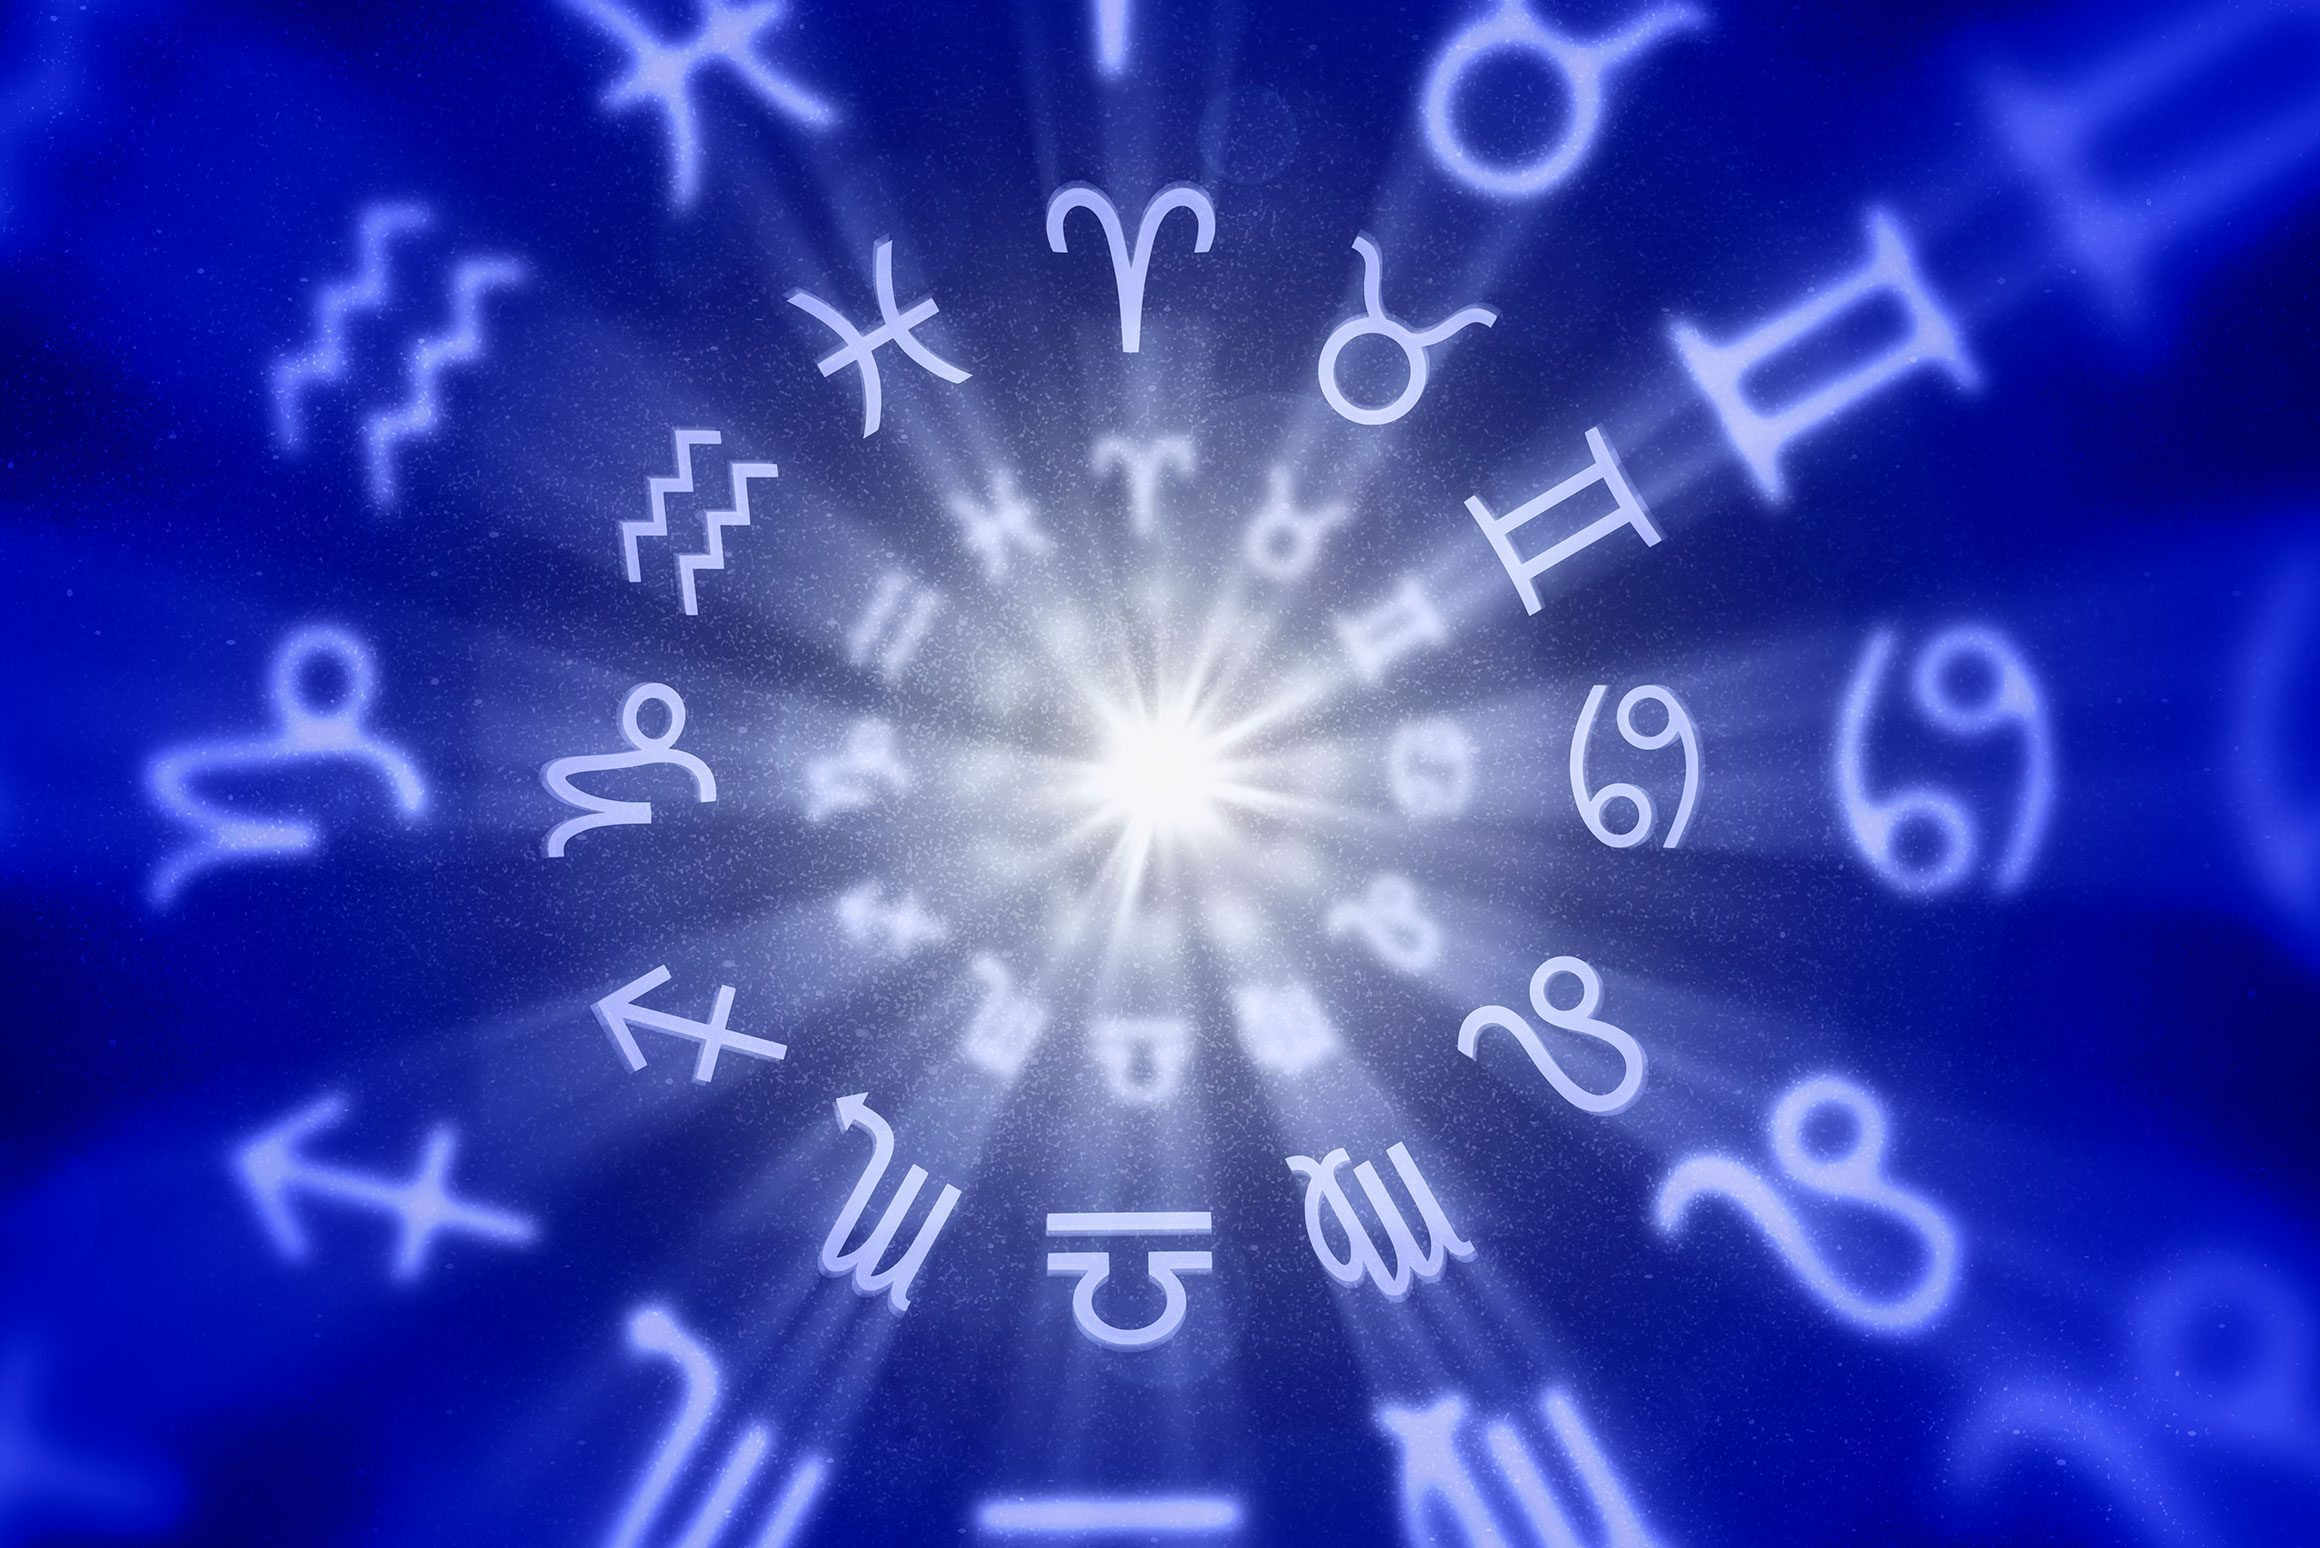 zodiac symbols